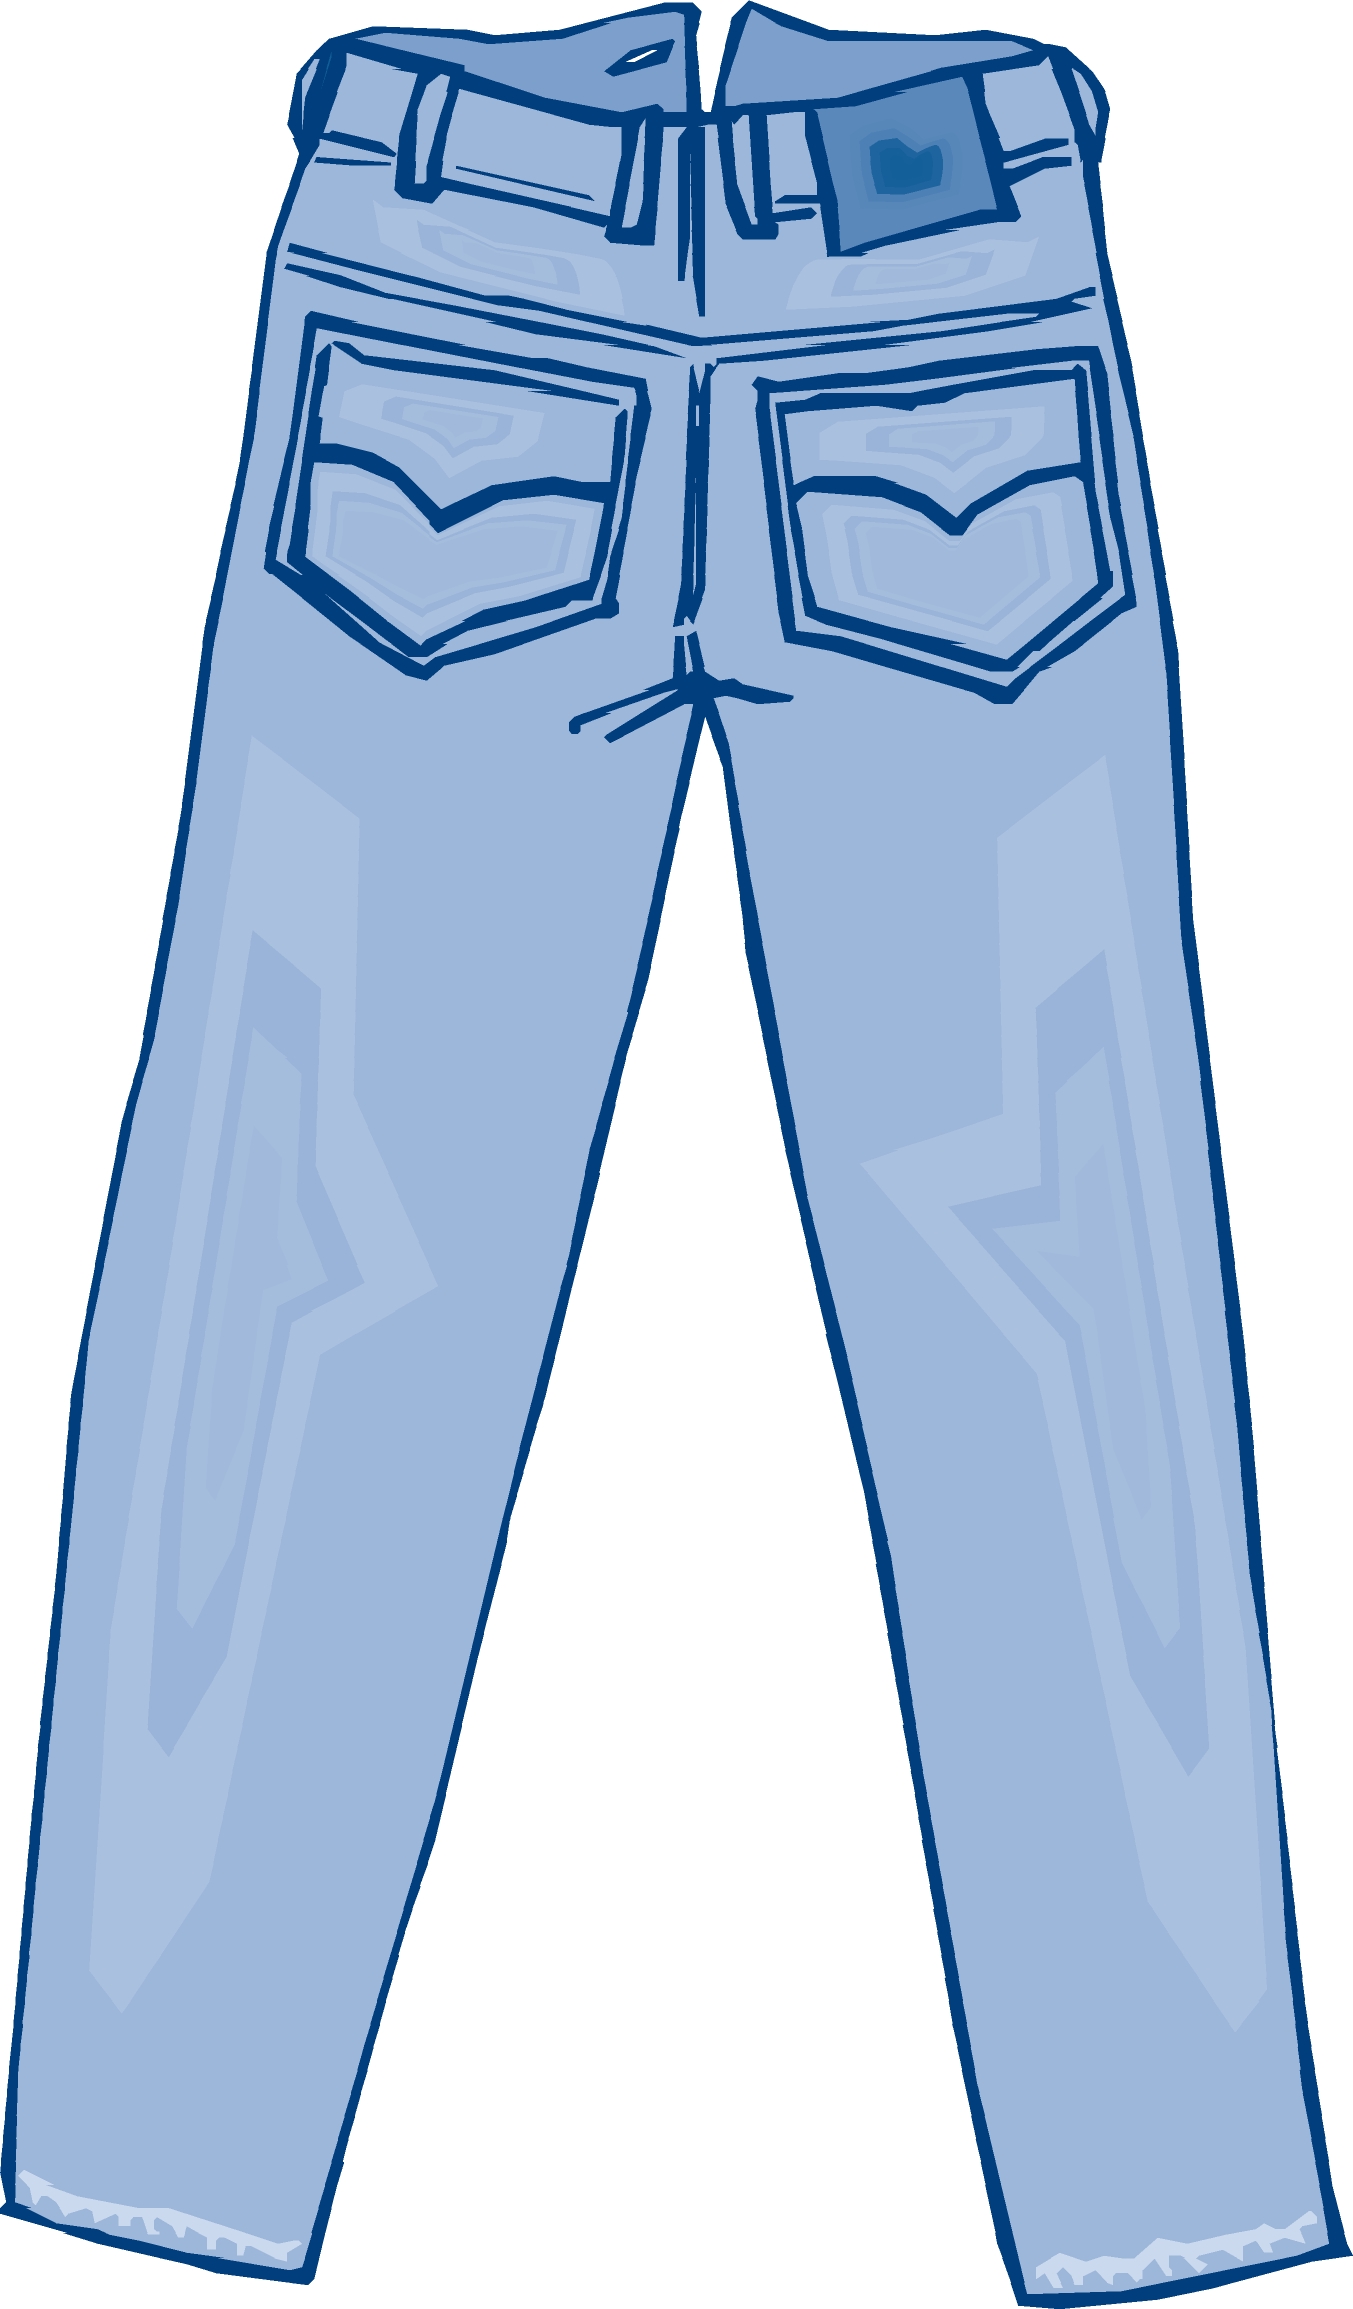 Pair of jeans encode. Pants clipart denim